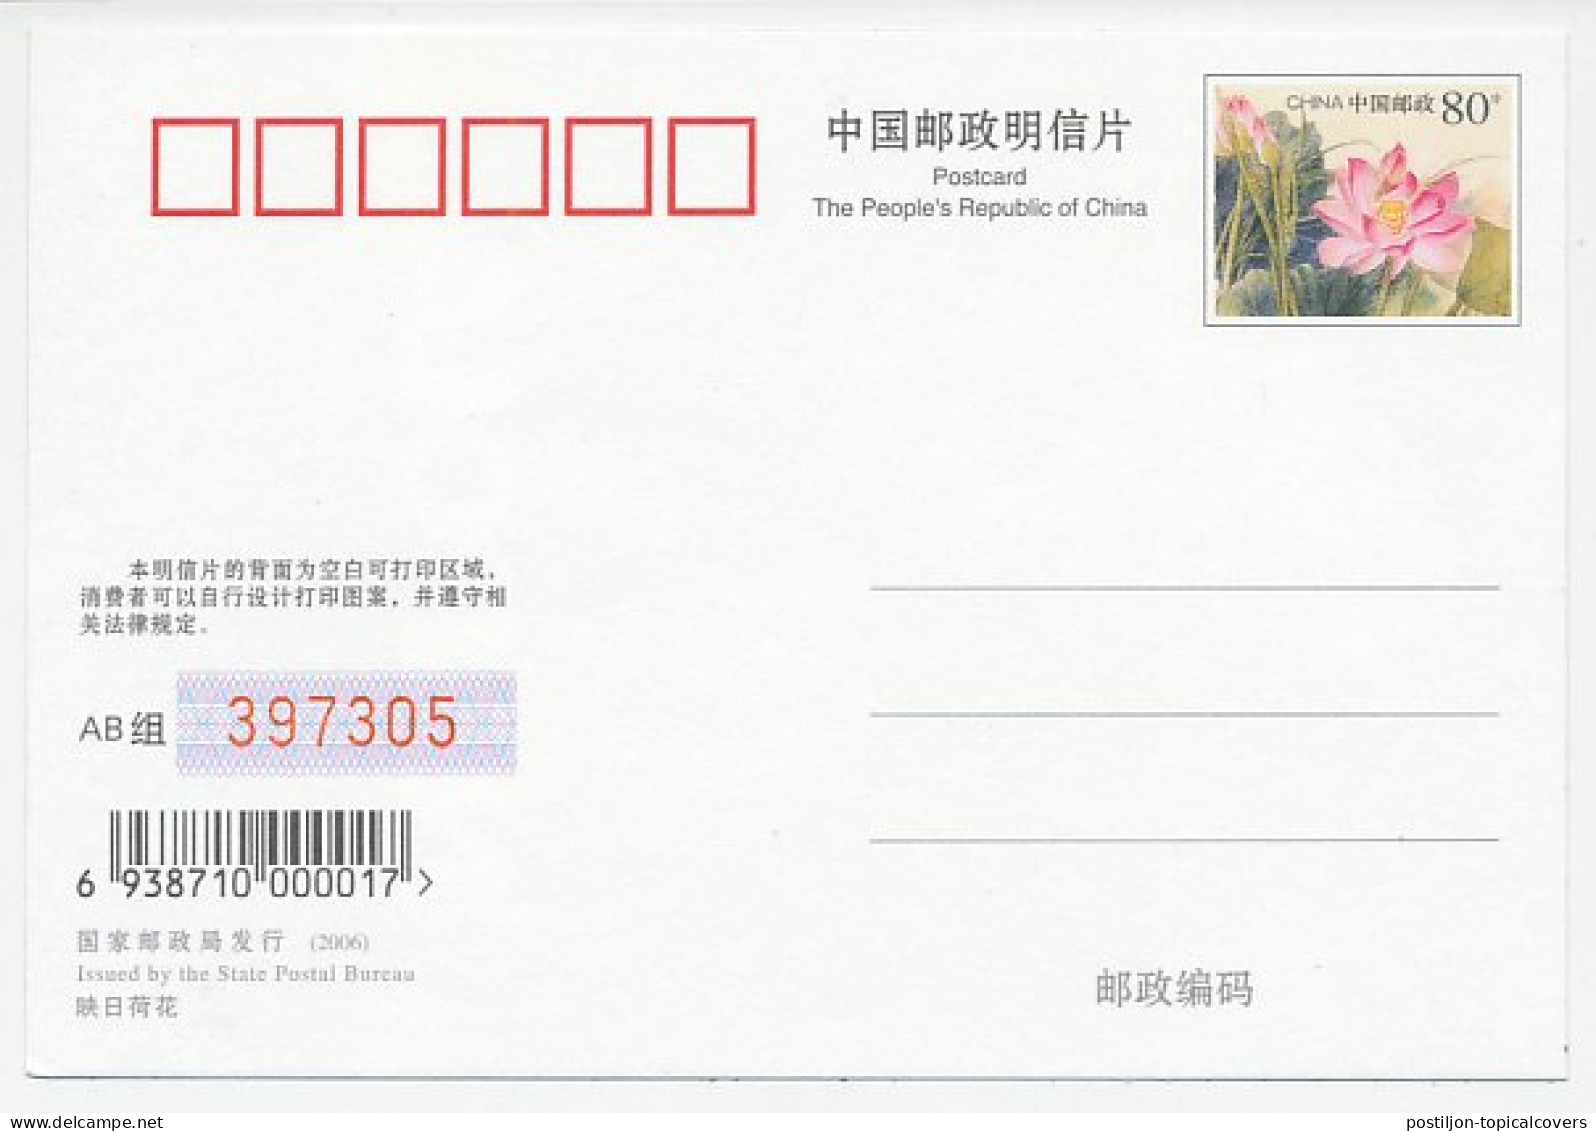 Postal Stationery China 2006 Napola - Hitler S Elite - Kino